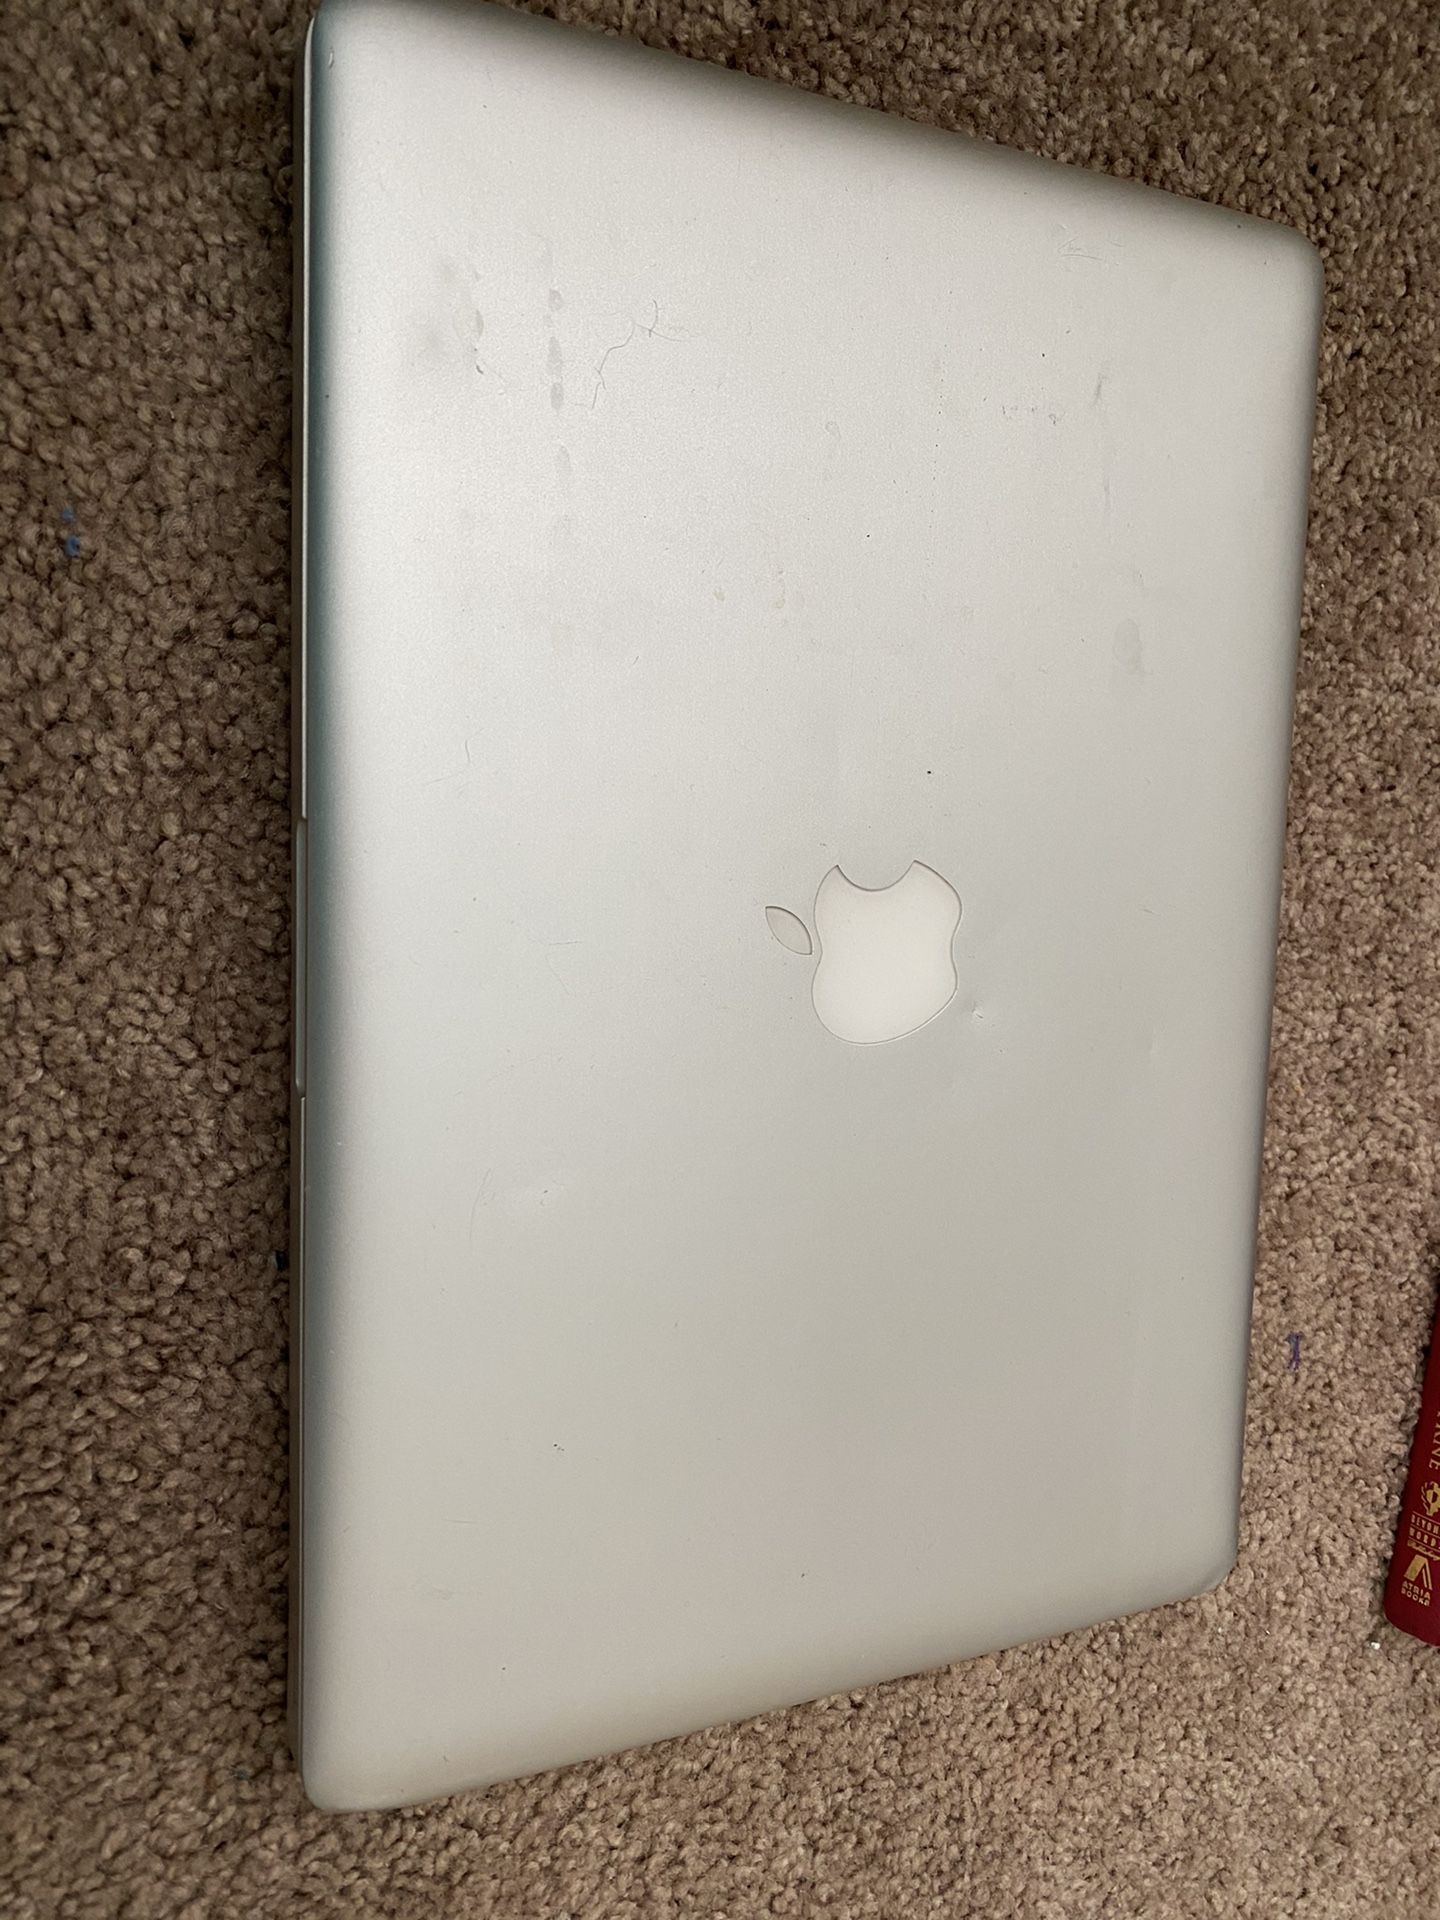 MacBook Pro. 13 inch mid 2012